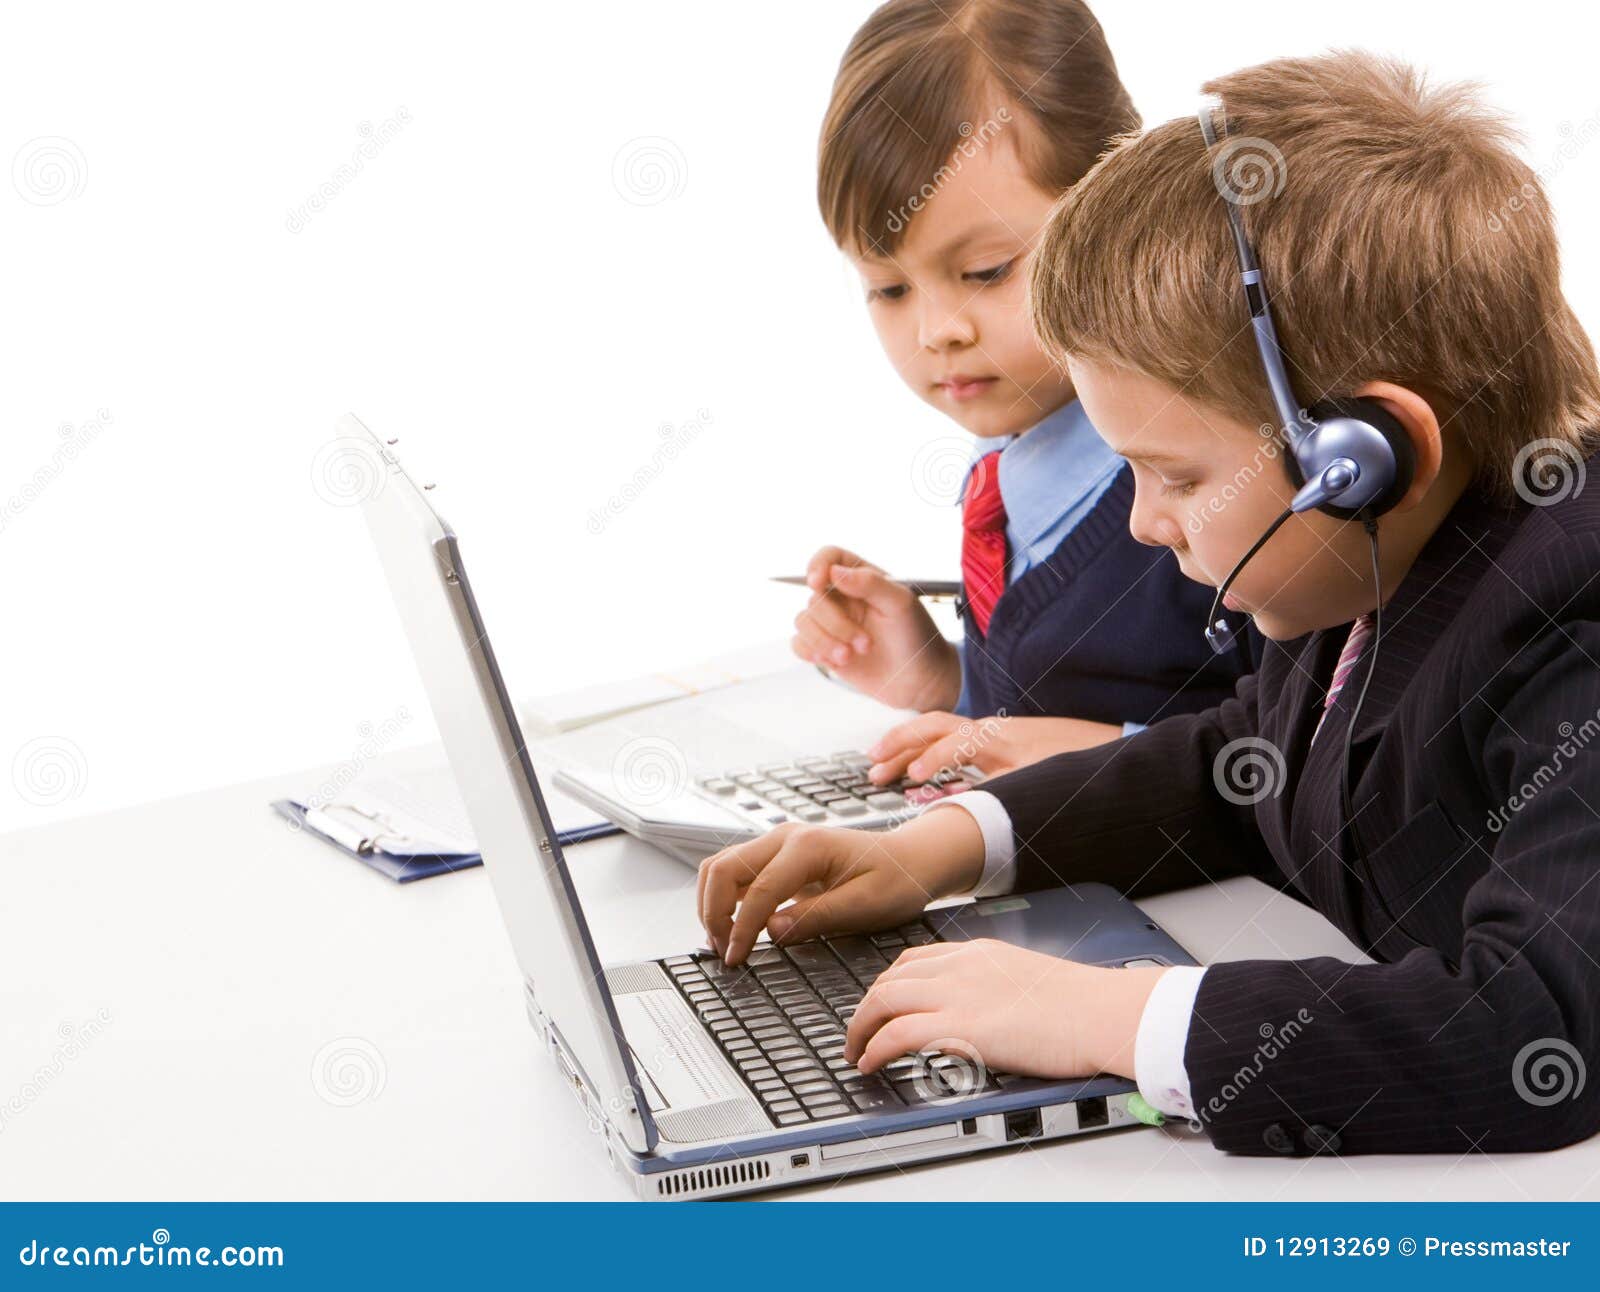 Computer work stock image. Image of corporate, headphones - 12913269